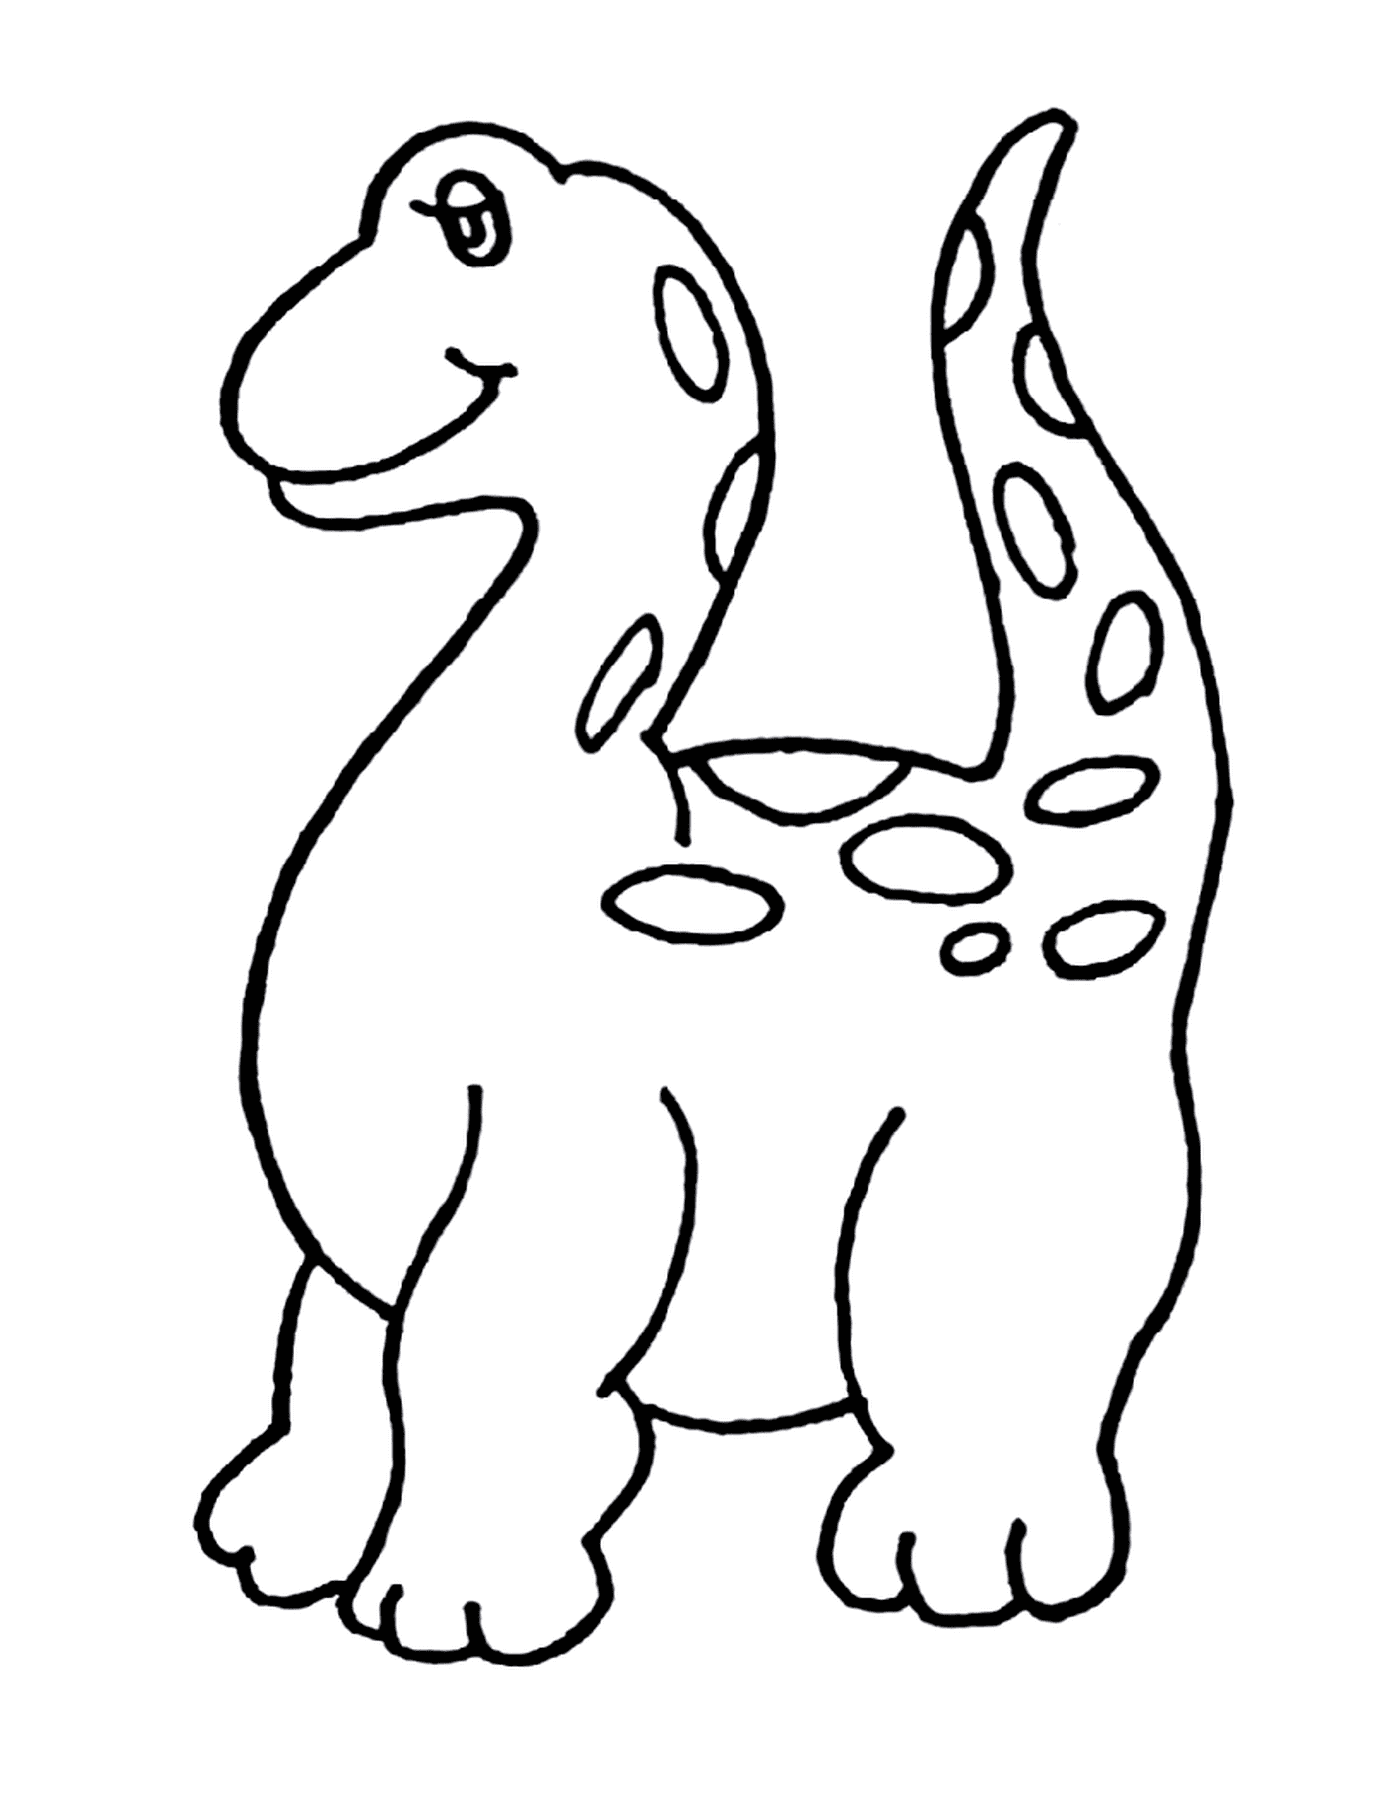  A giraffe 